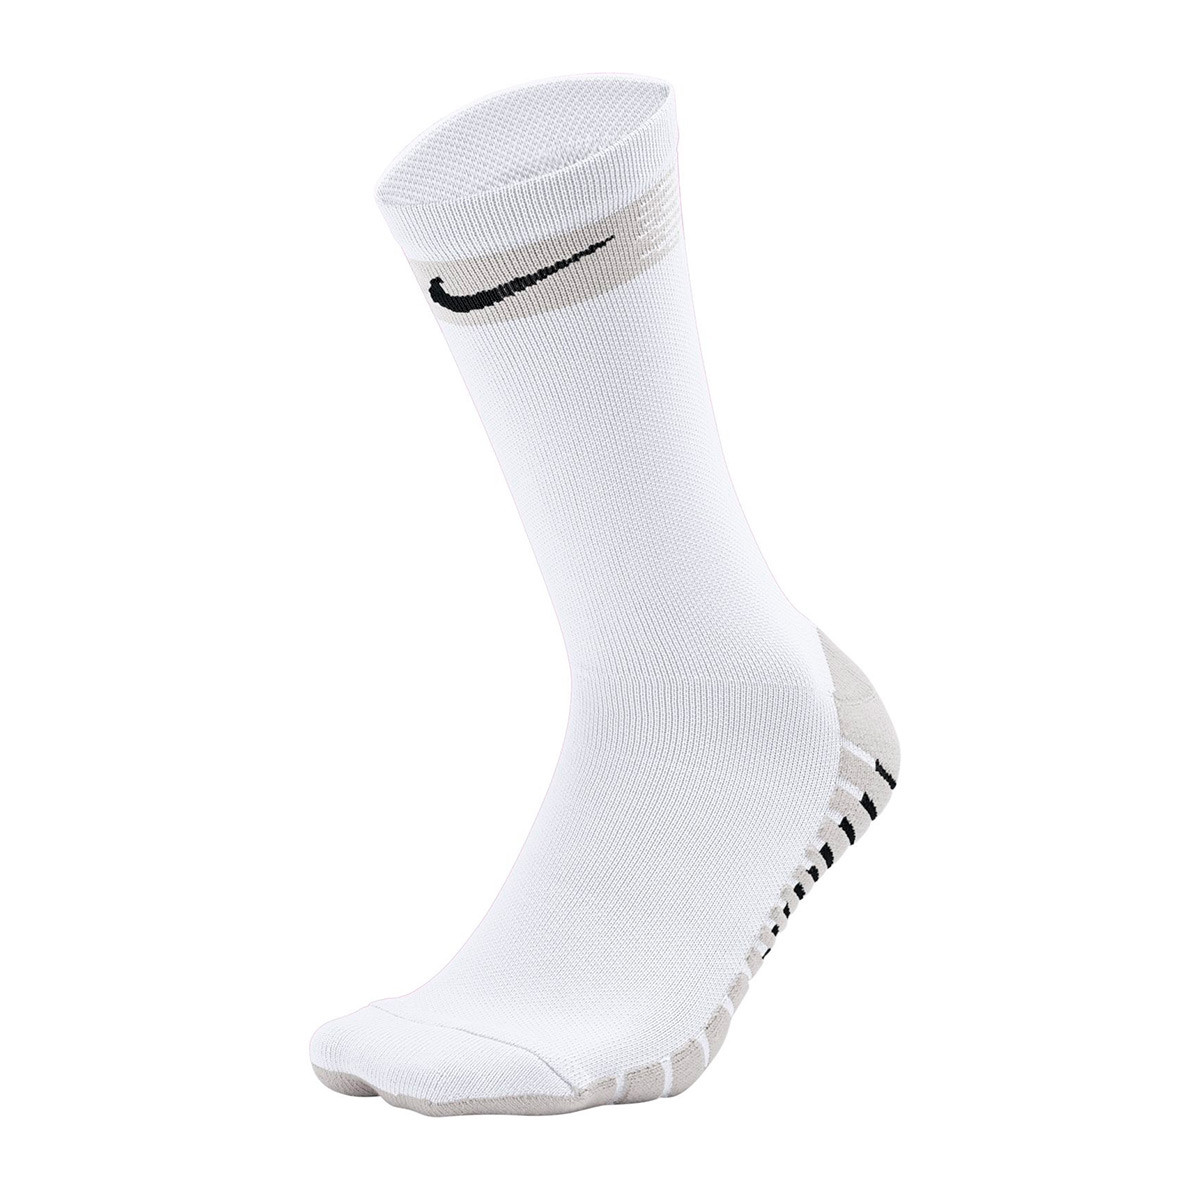 Socks Nike Crew MatchFit White-Black 